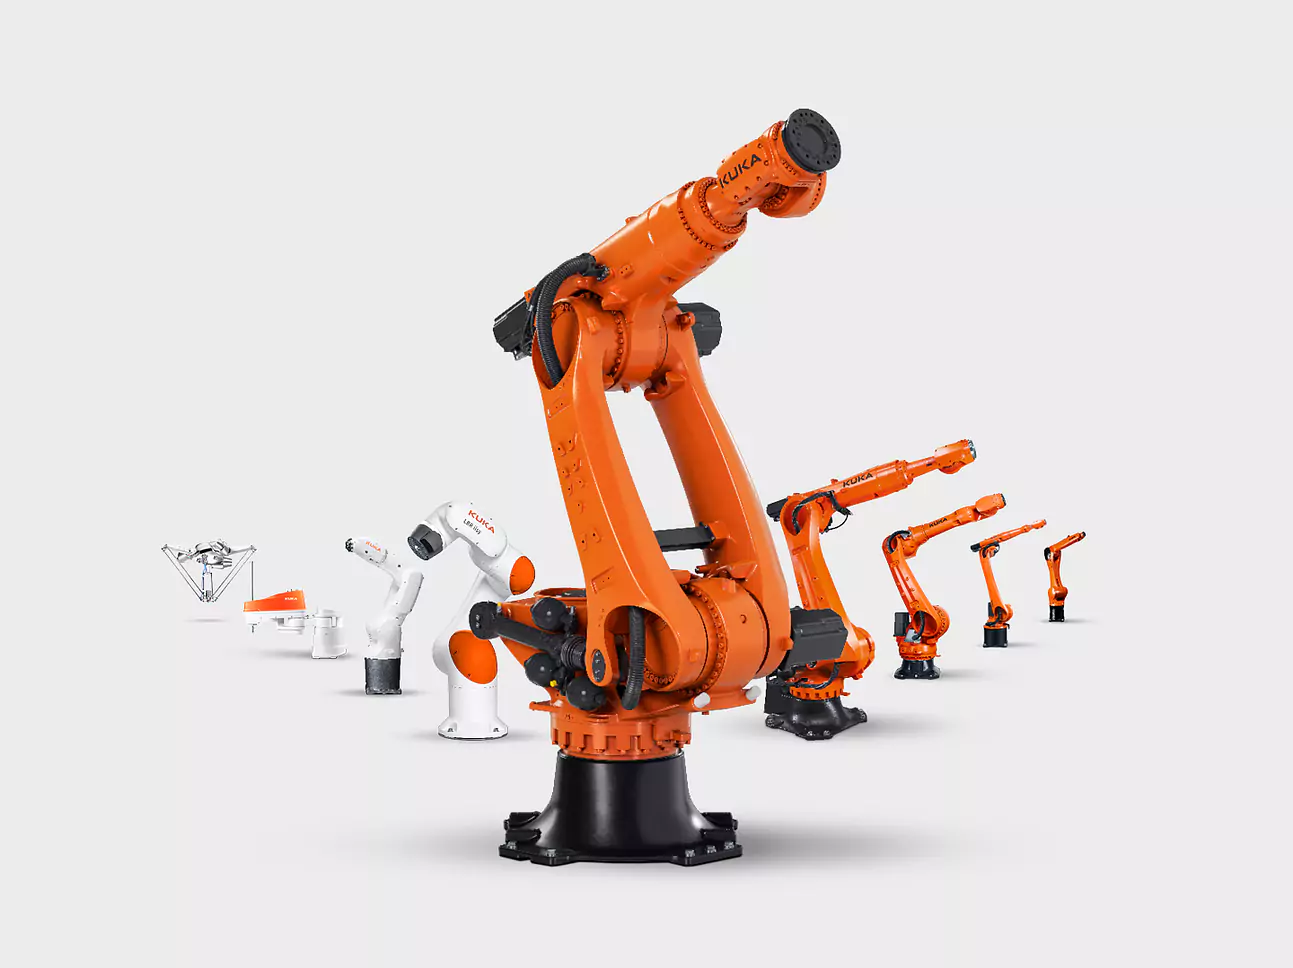 Robots industriels